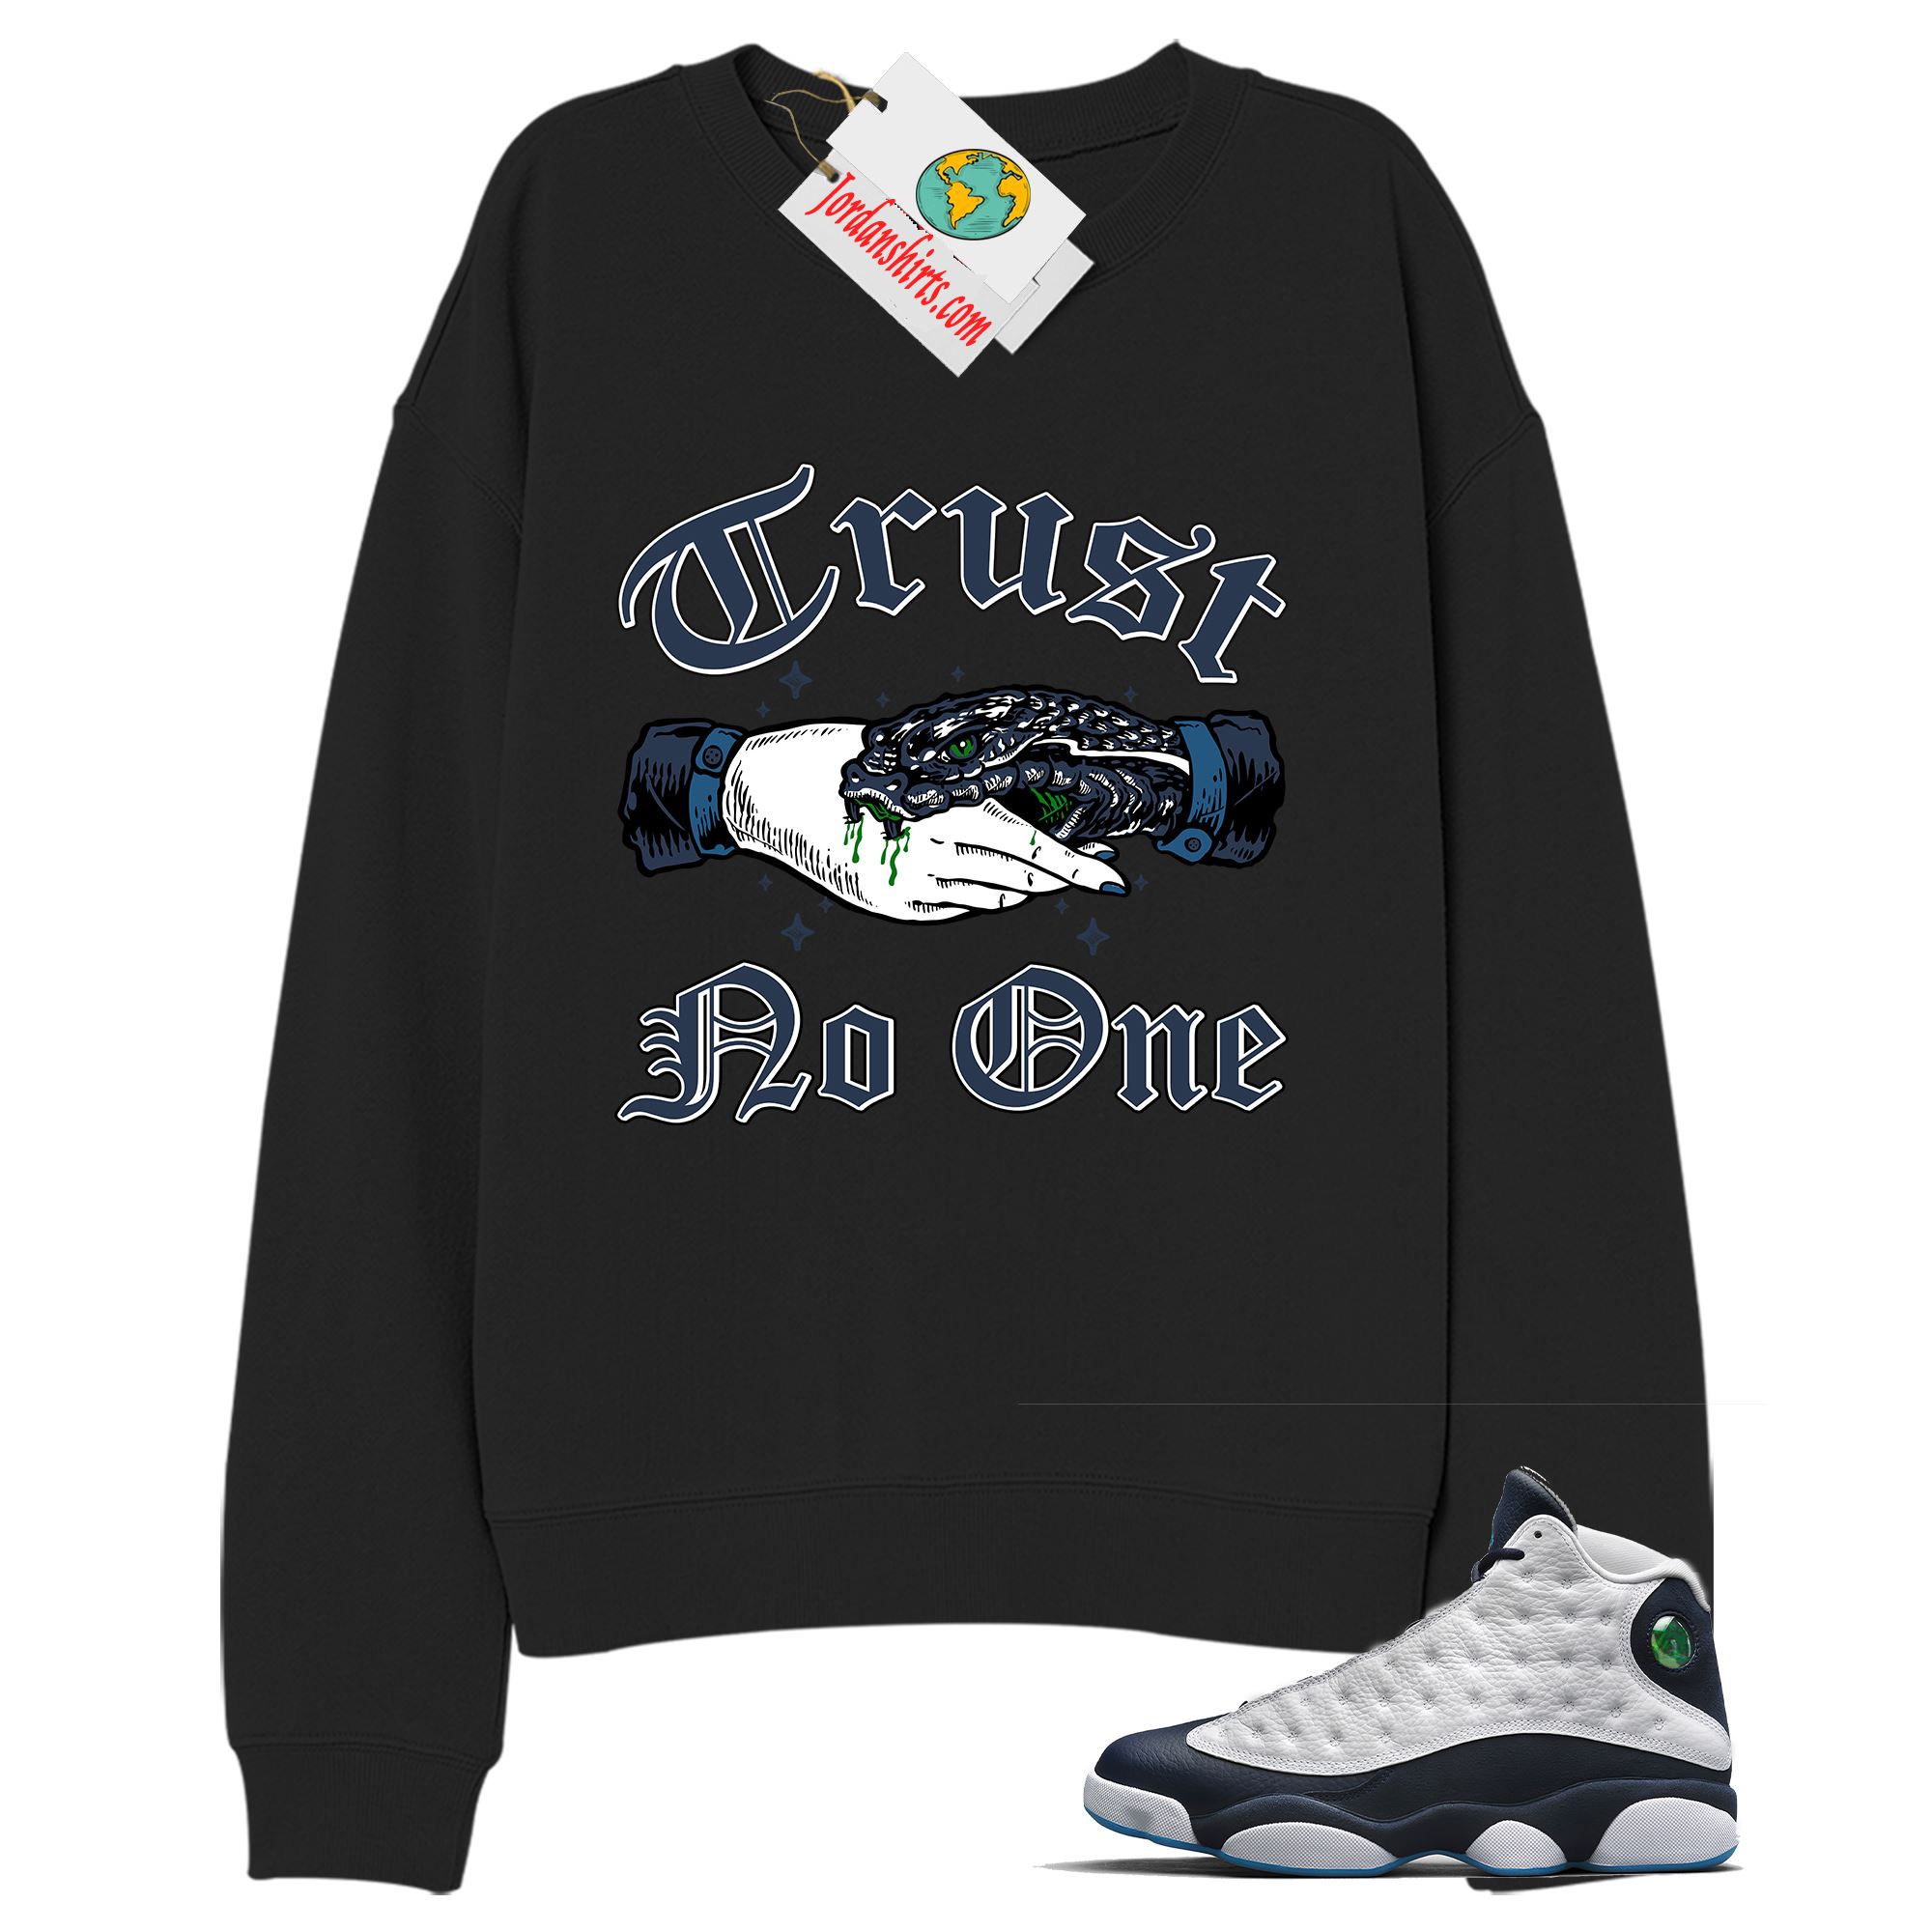 Jordan 13 Sweatshirt, Trust No One Deal With Snake Black Sweatshirt Air Jordan 13 Obsidian 13s Full Size Up To 5xl